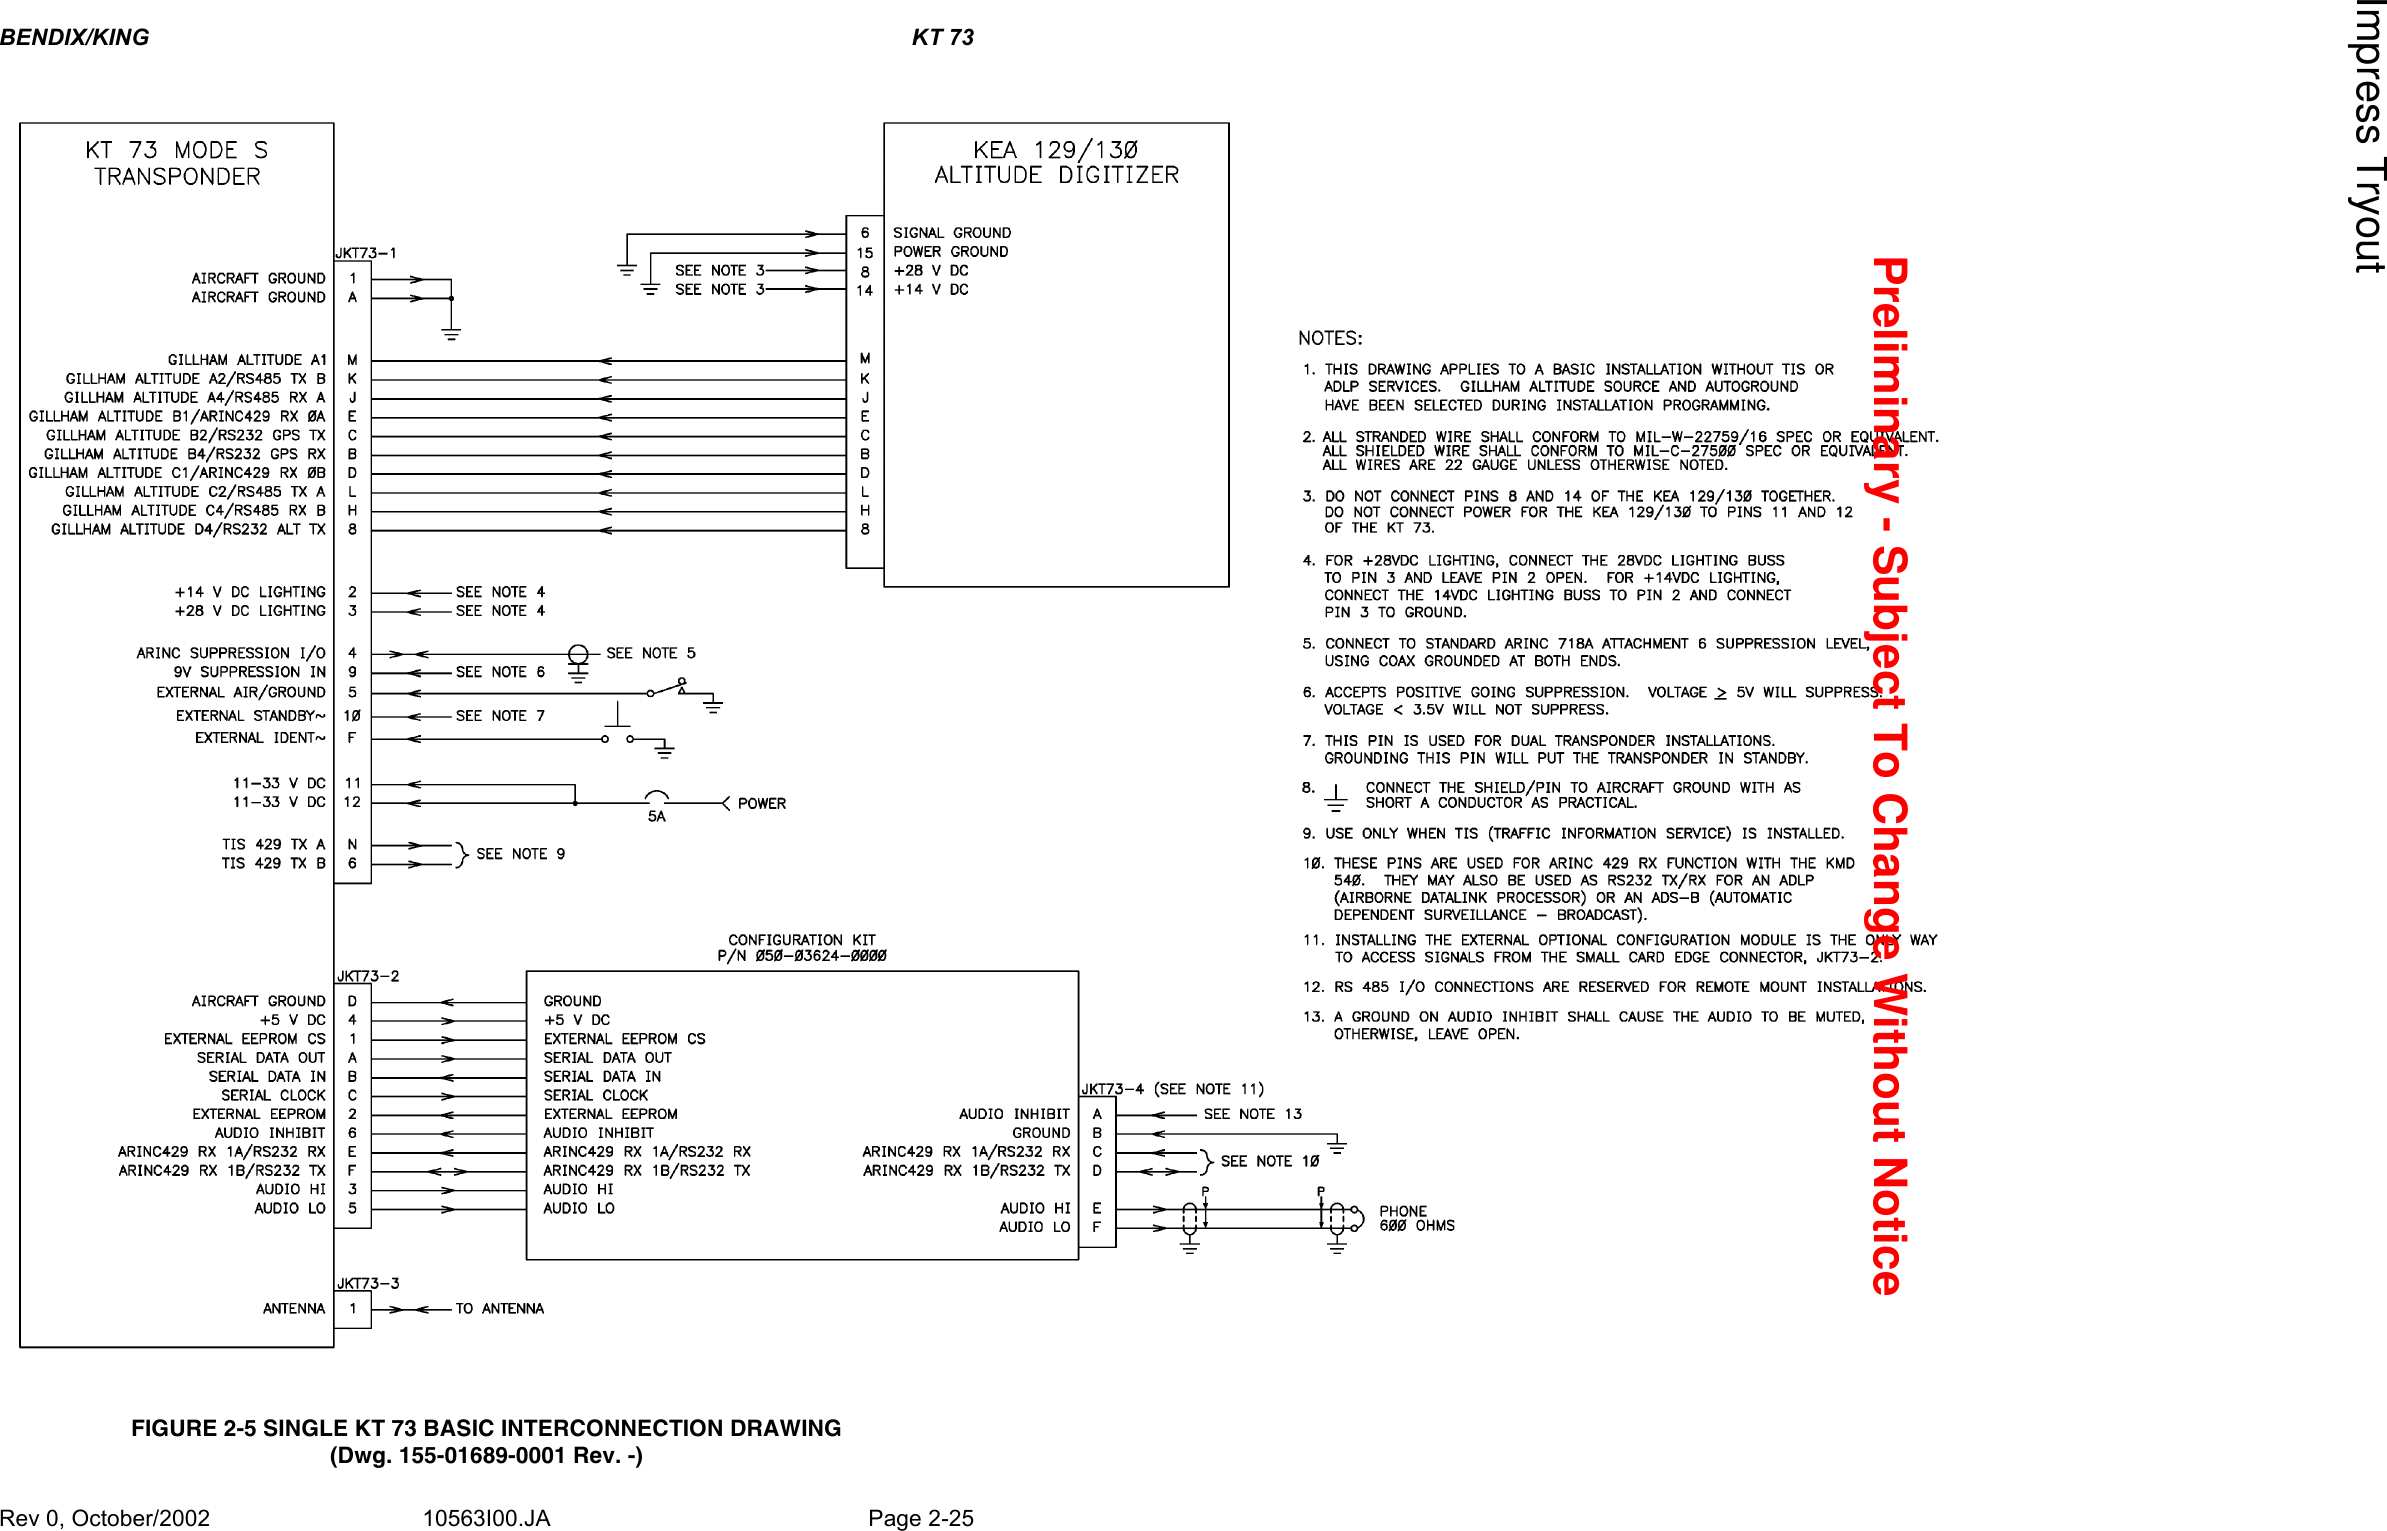 Page 41 of Honeywell KT73 Mode S Transponder, KT73 User Manual 73im